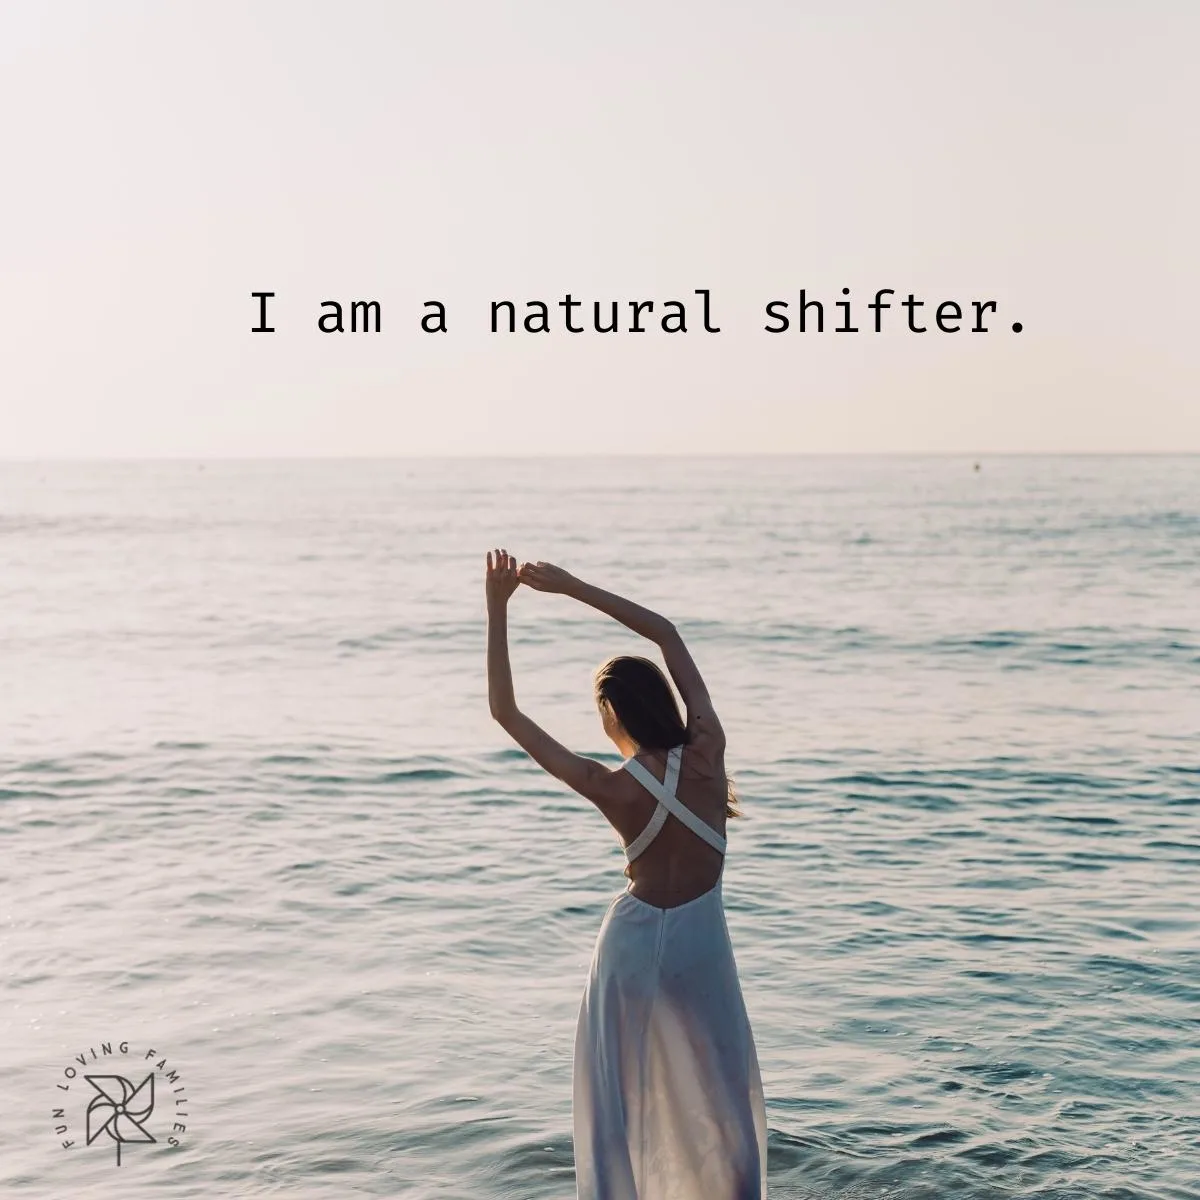 I am a natural shifter affirmation